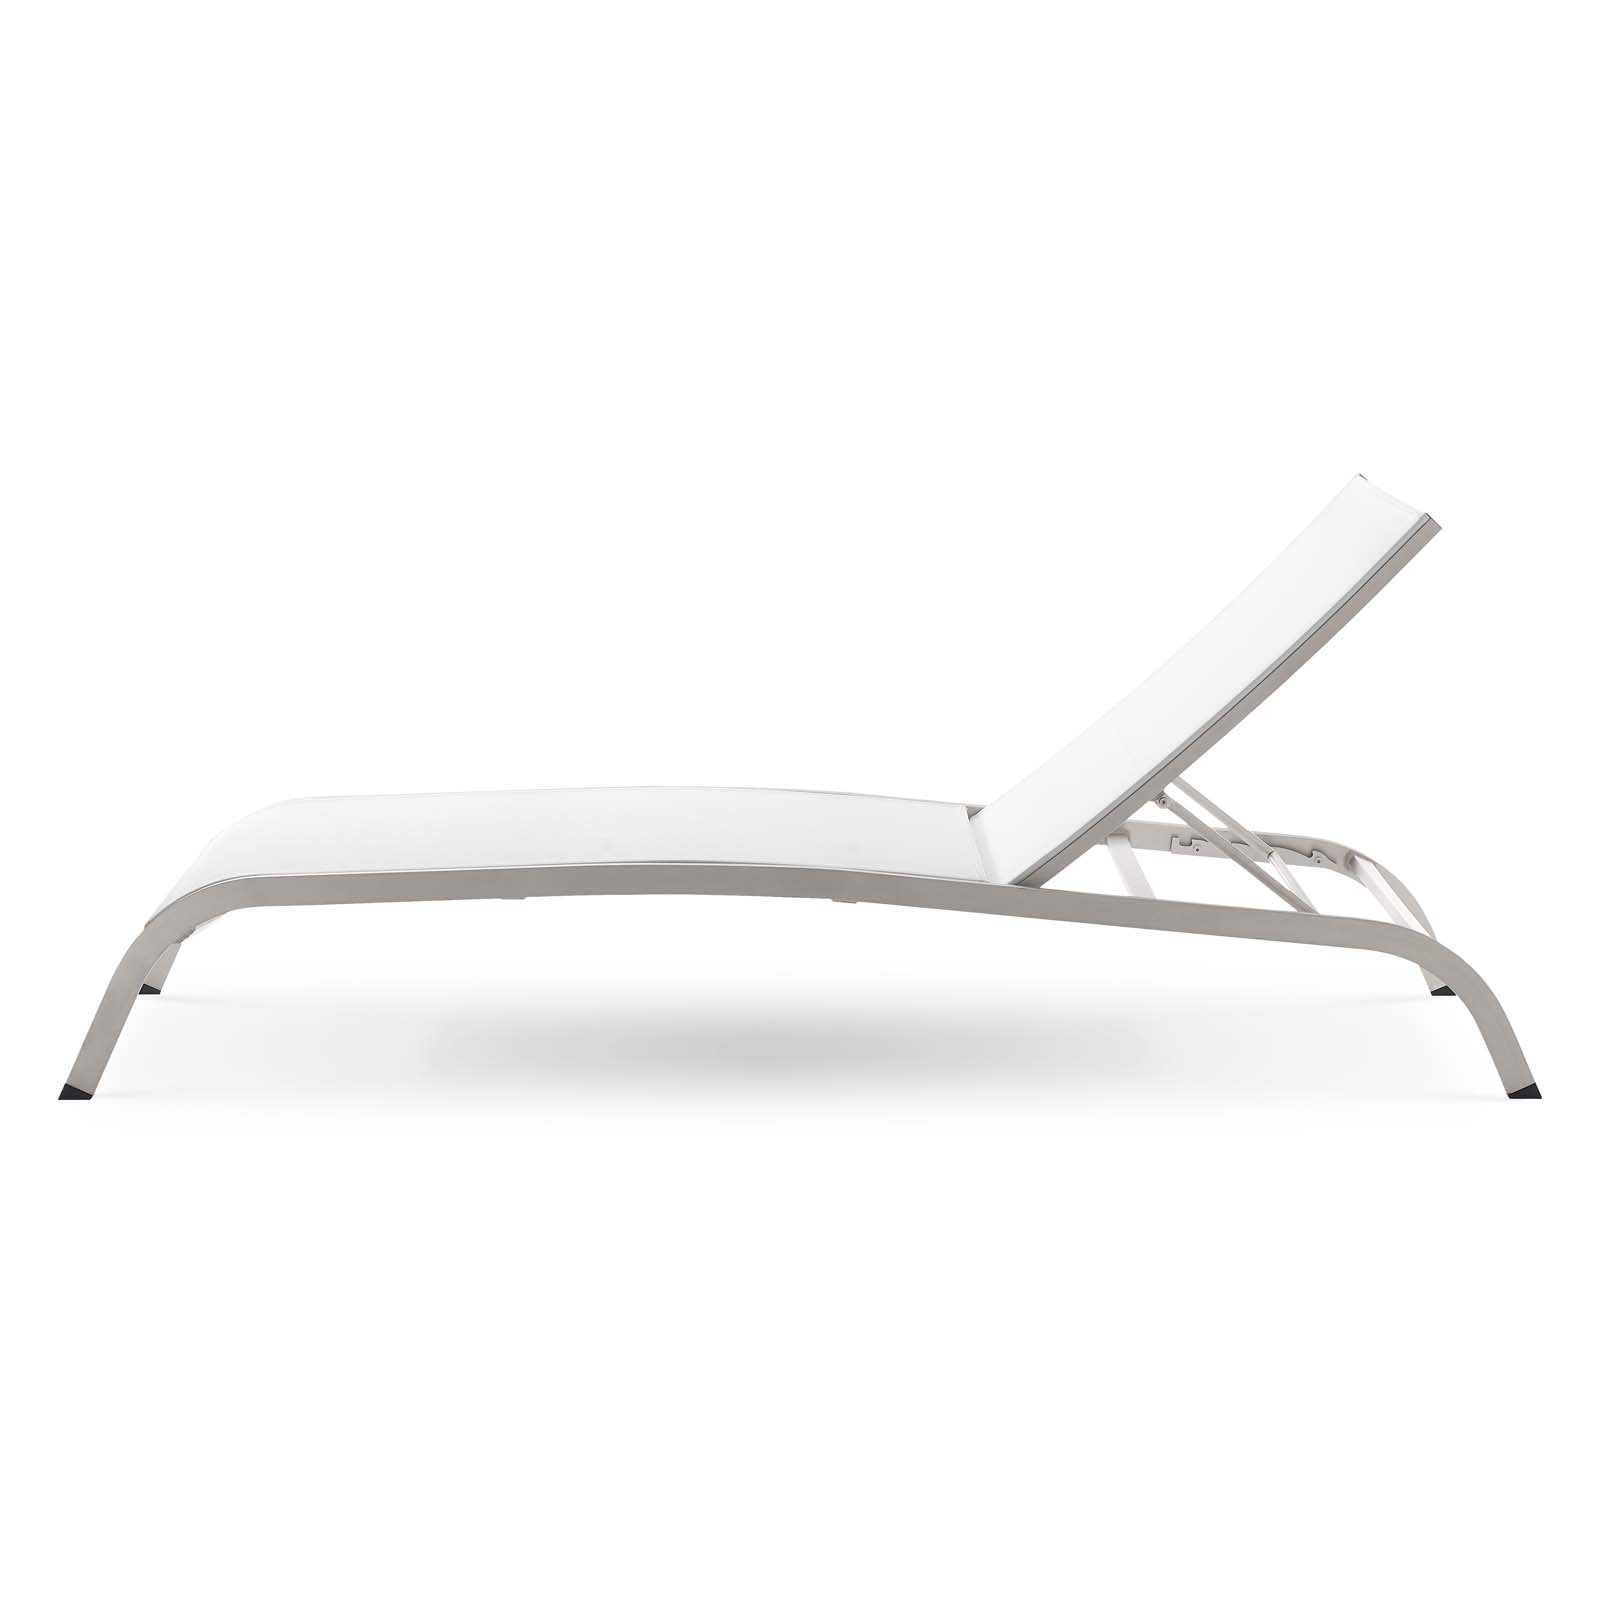 Contemporary Modern Urban Designer Outdoor Patio Balcony Garden Furniture Lounge Lounge Chair, Aluminum, White - image 5 of 6